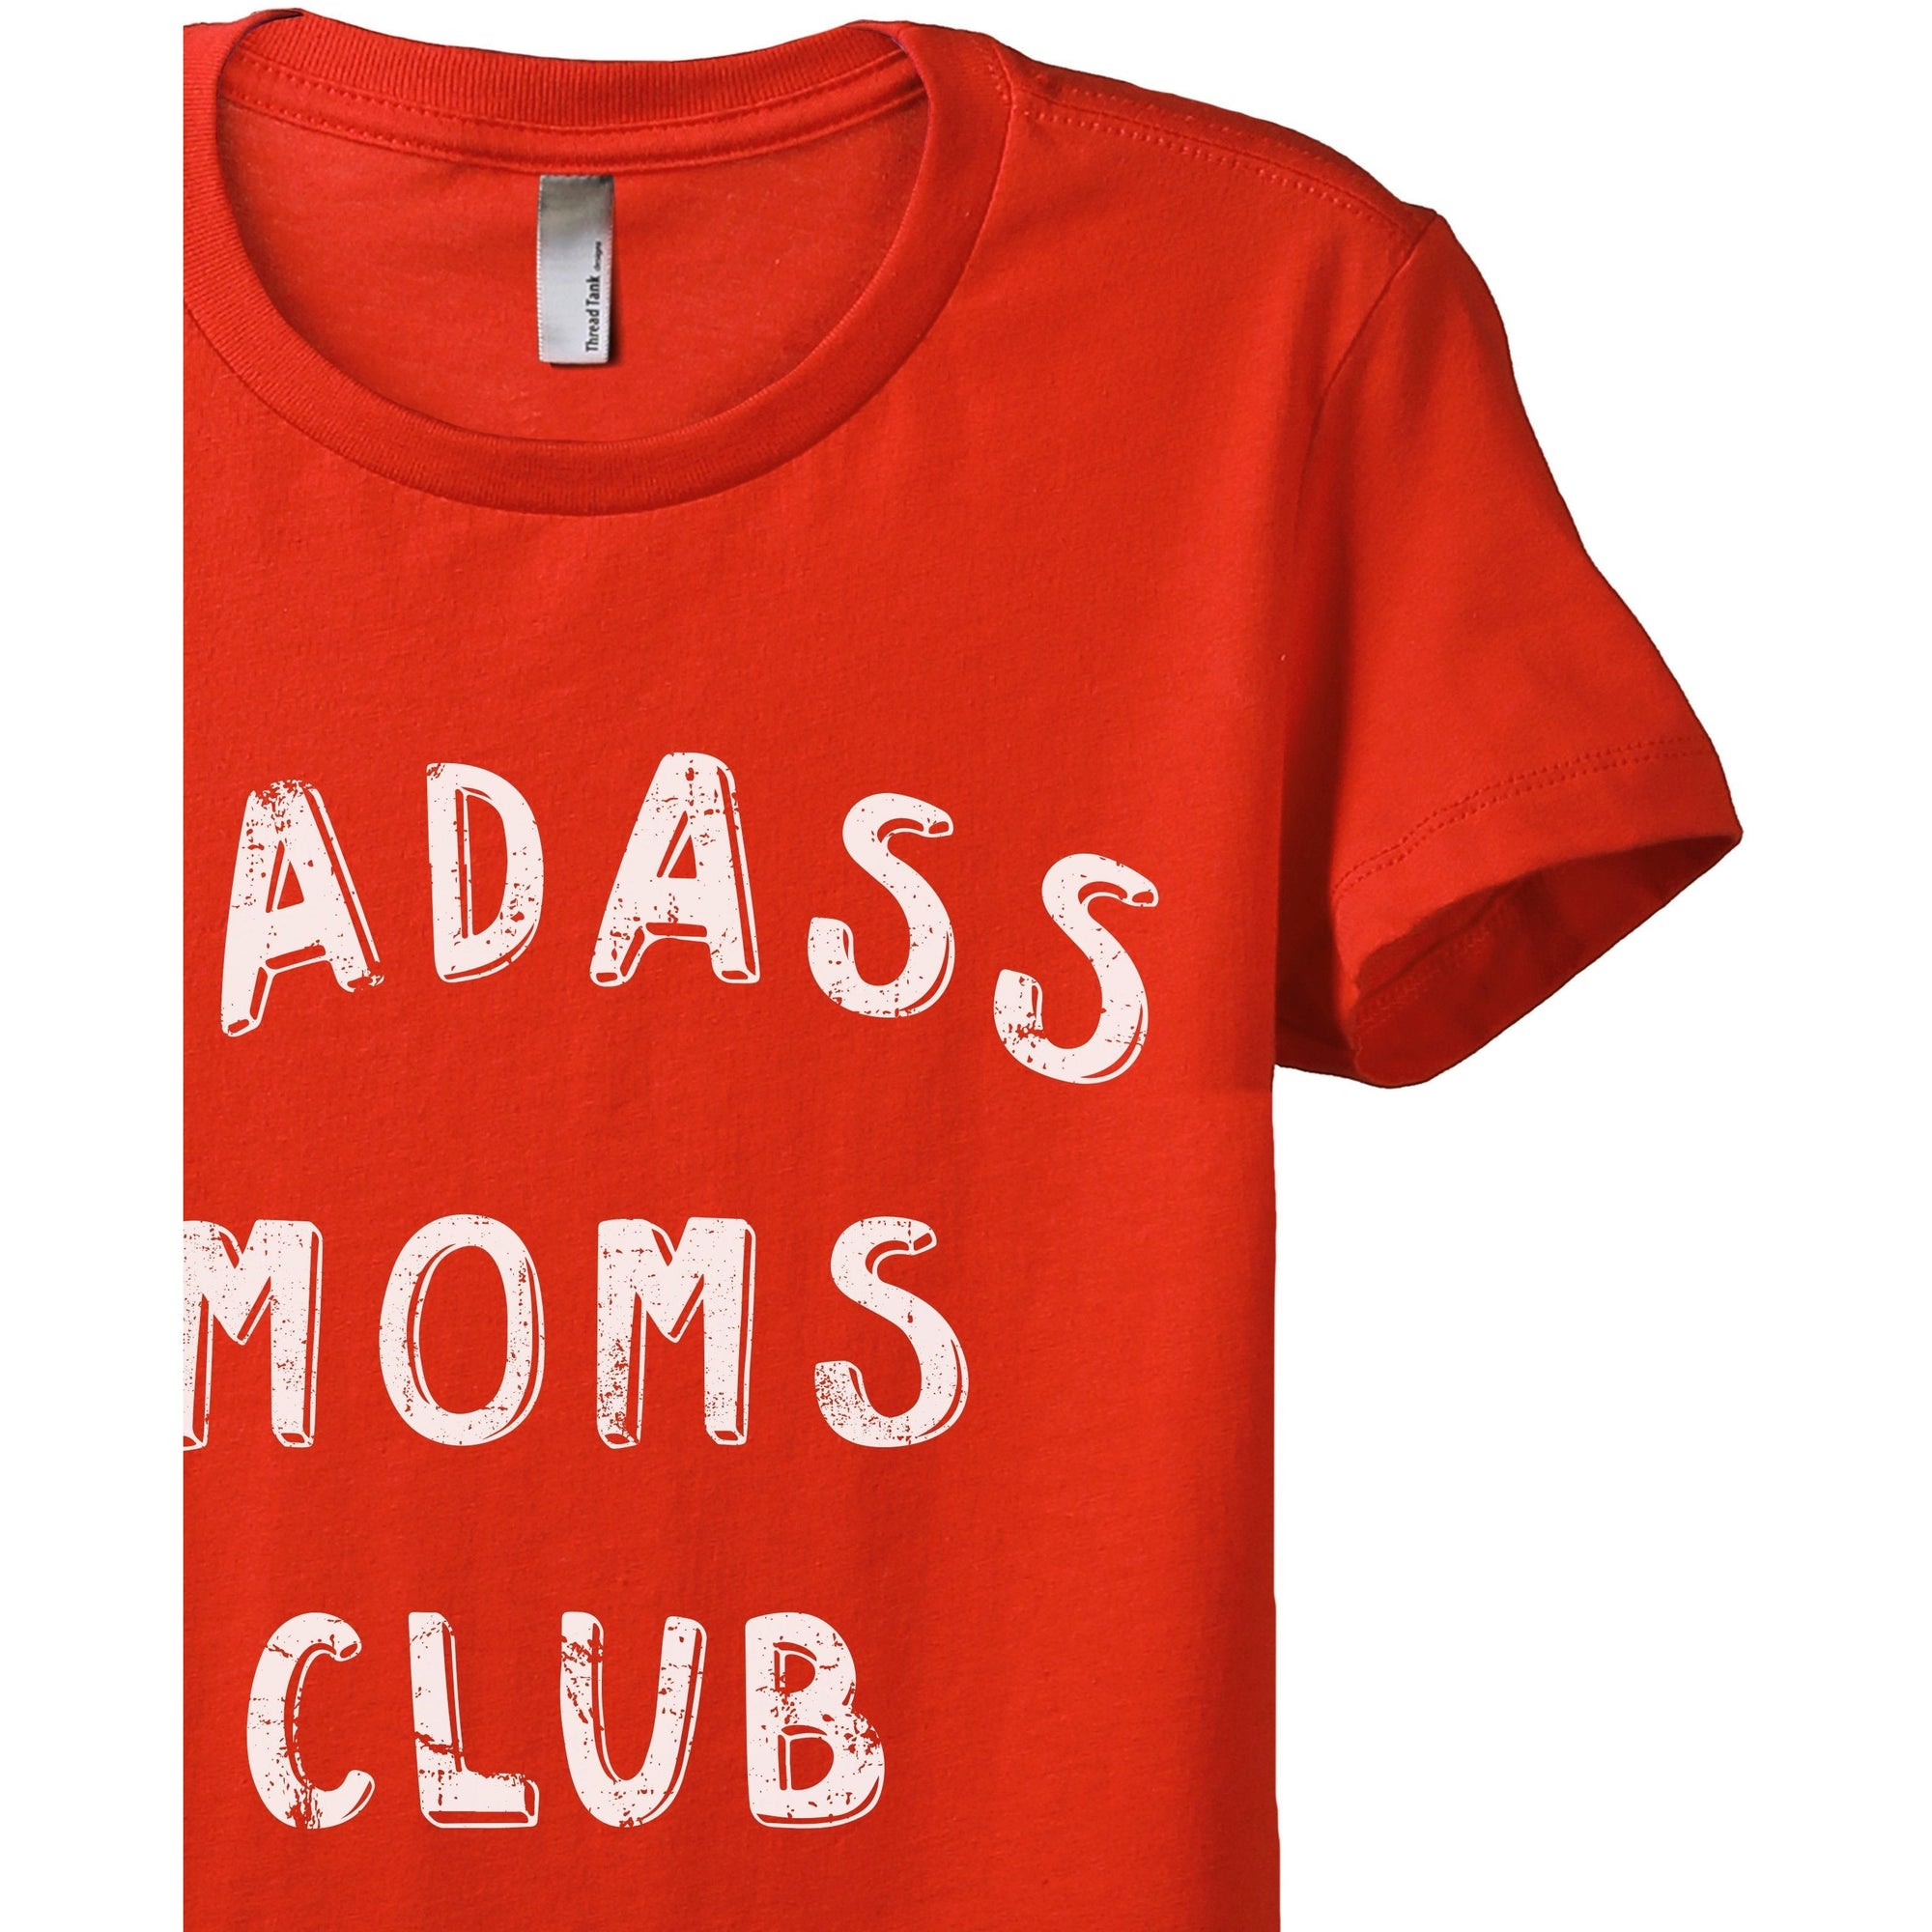 Badass MOMS Club